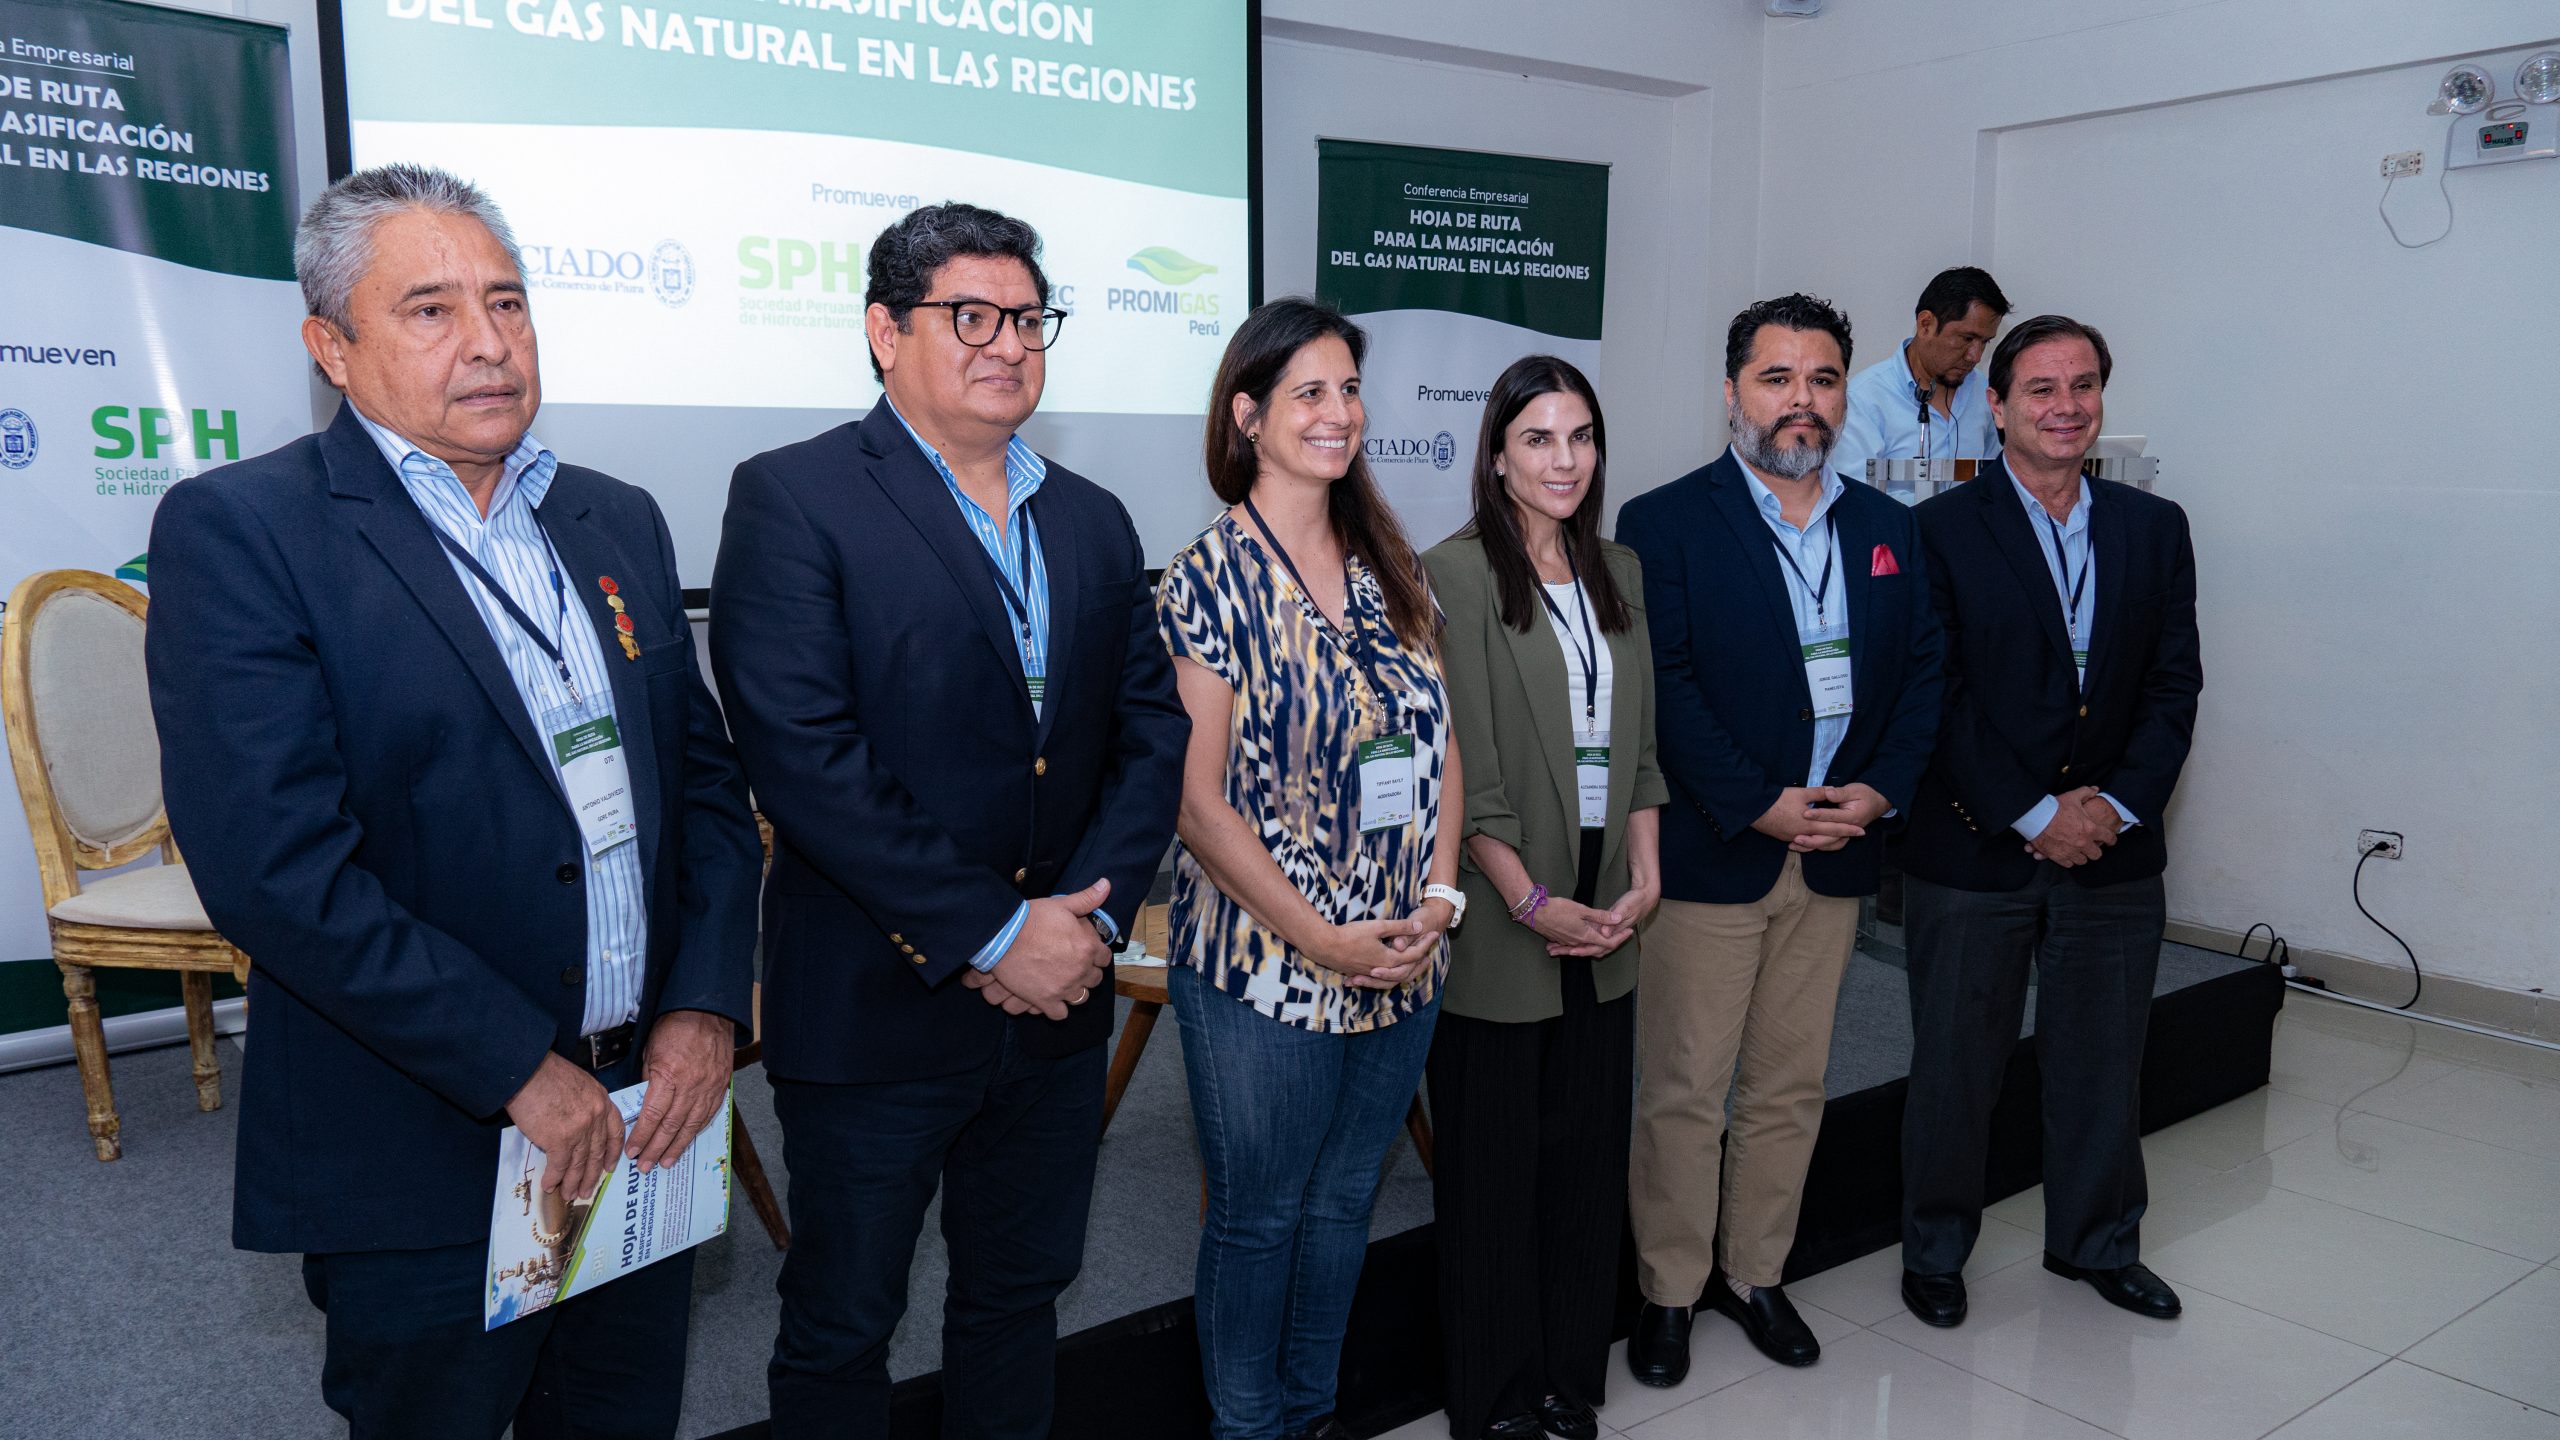 Sociedad Peruana de Hidrocarburos: “La energía que va a liderar la matriz energética es el gas natural”